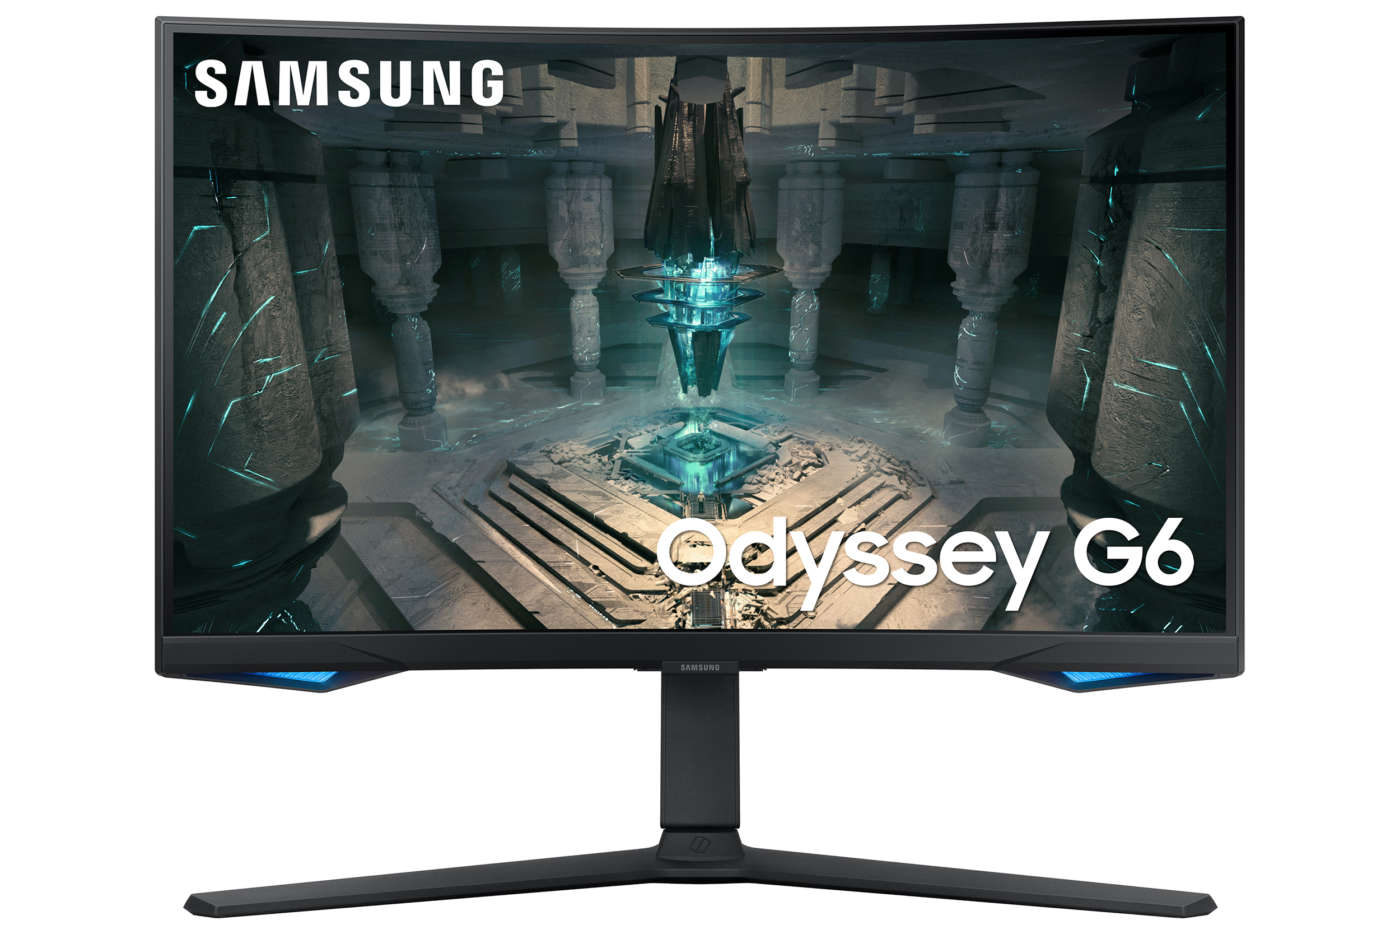 Samsung Odyssey